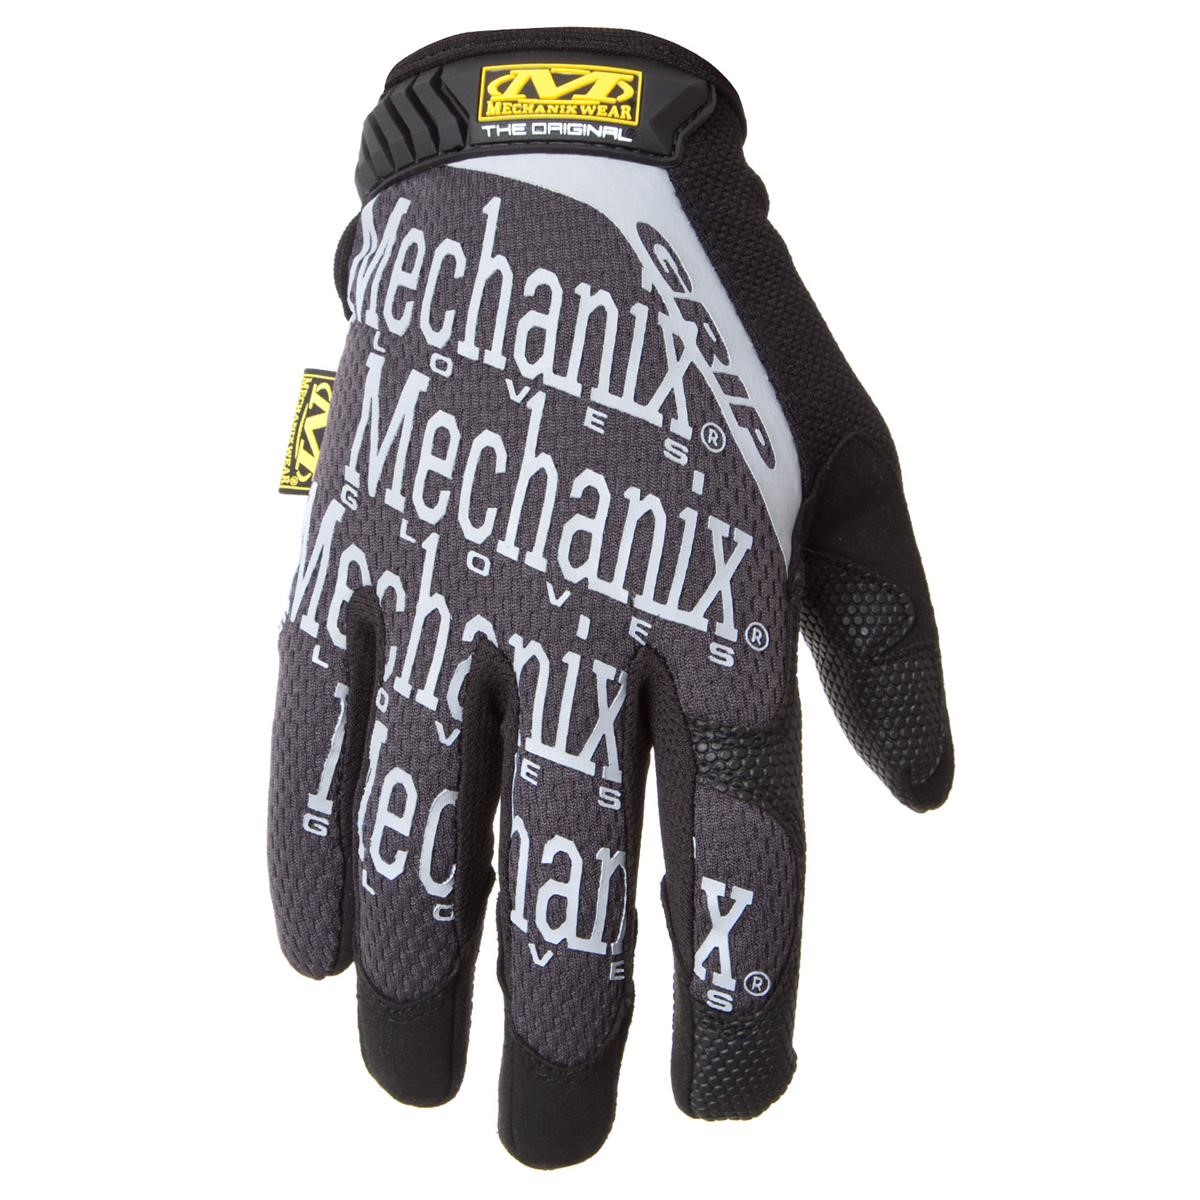 Mechanix Wear Gloves The Original Grey/Black - Grip